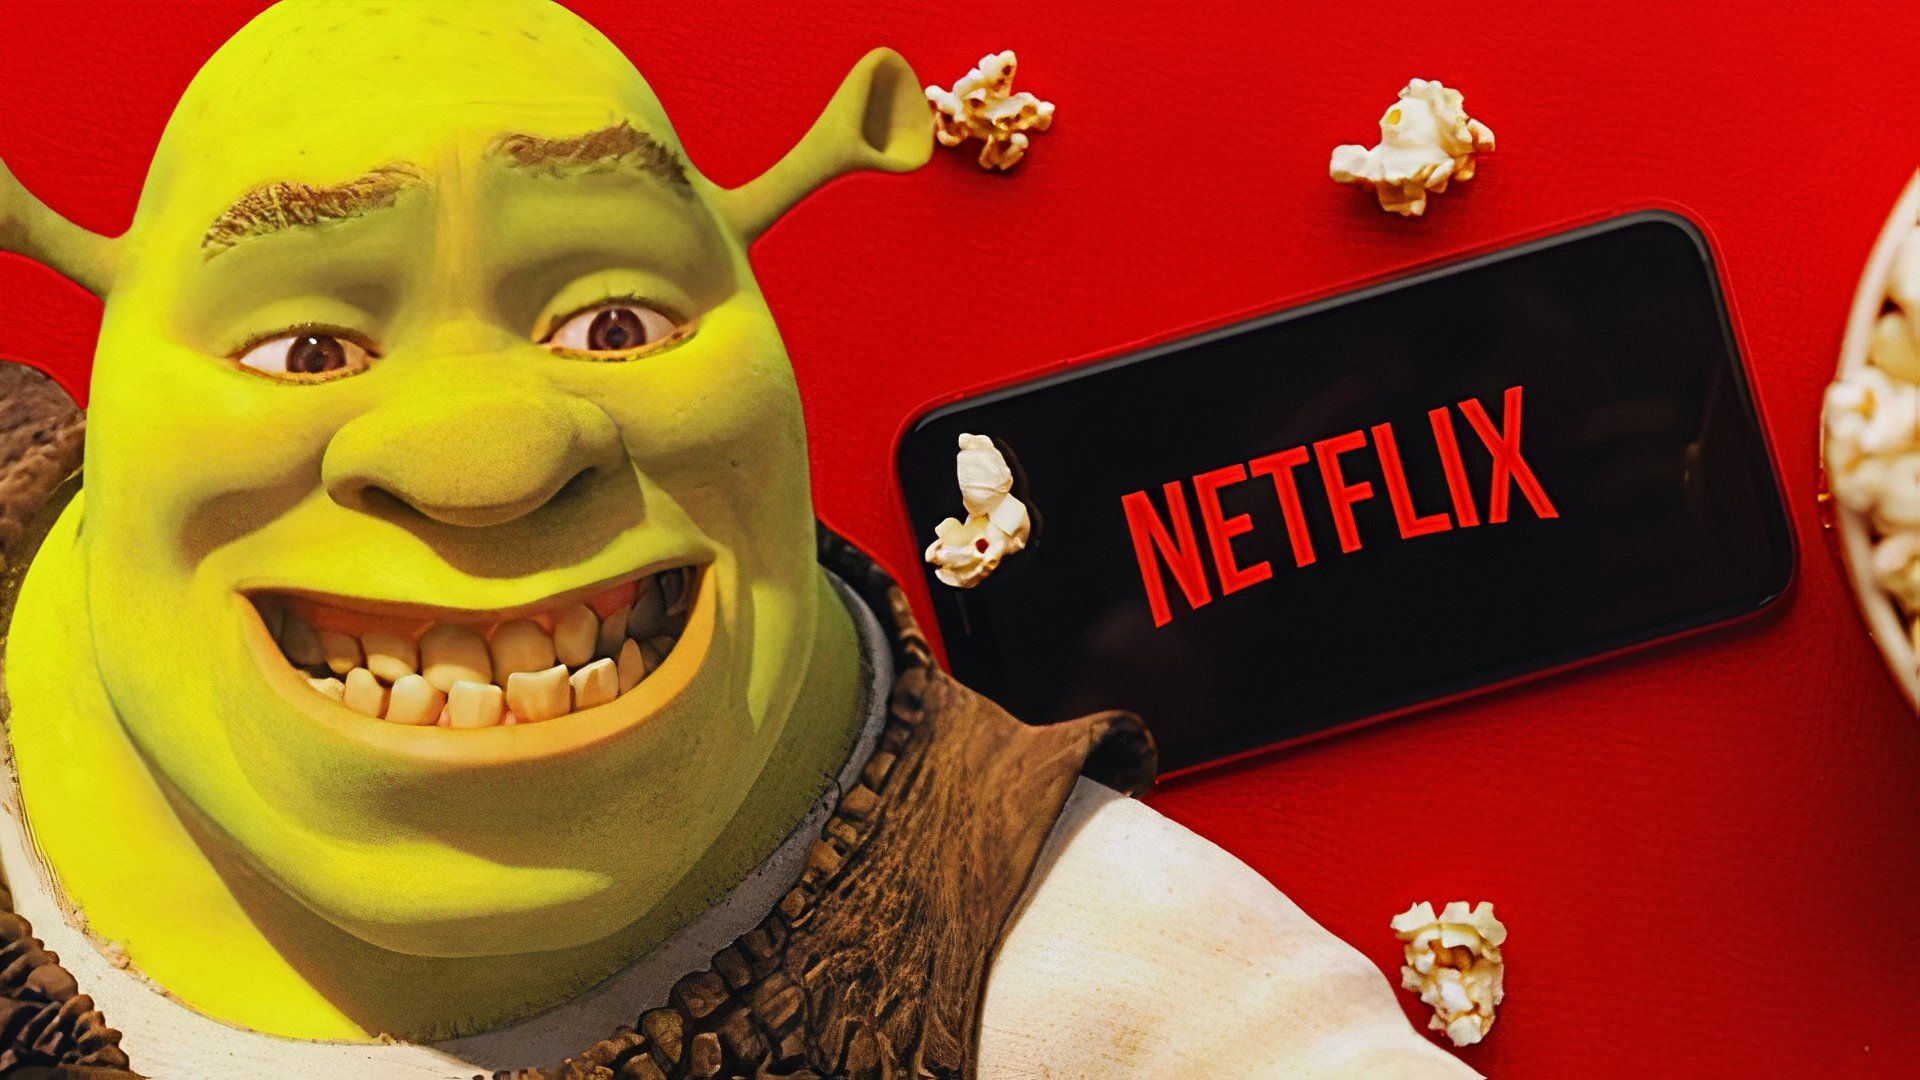 Shrek smiling alongside Netflix on a phone and popcorn.